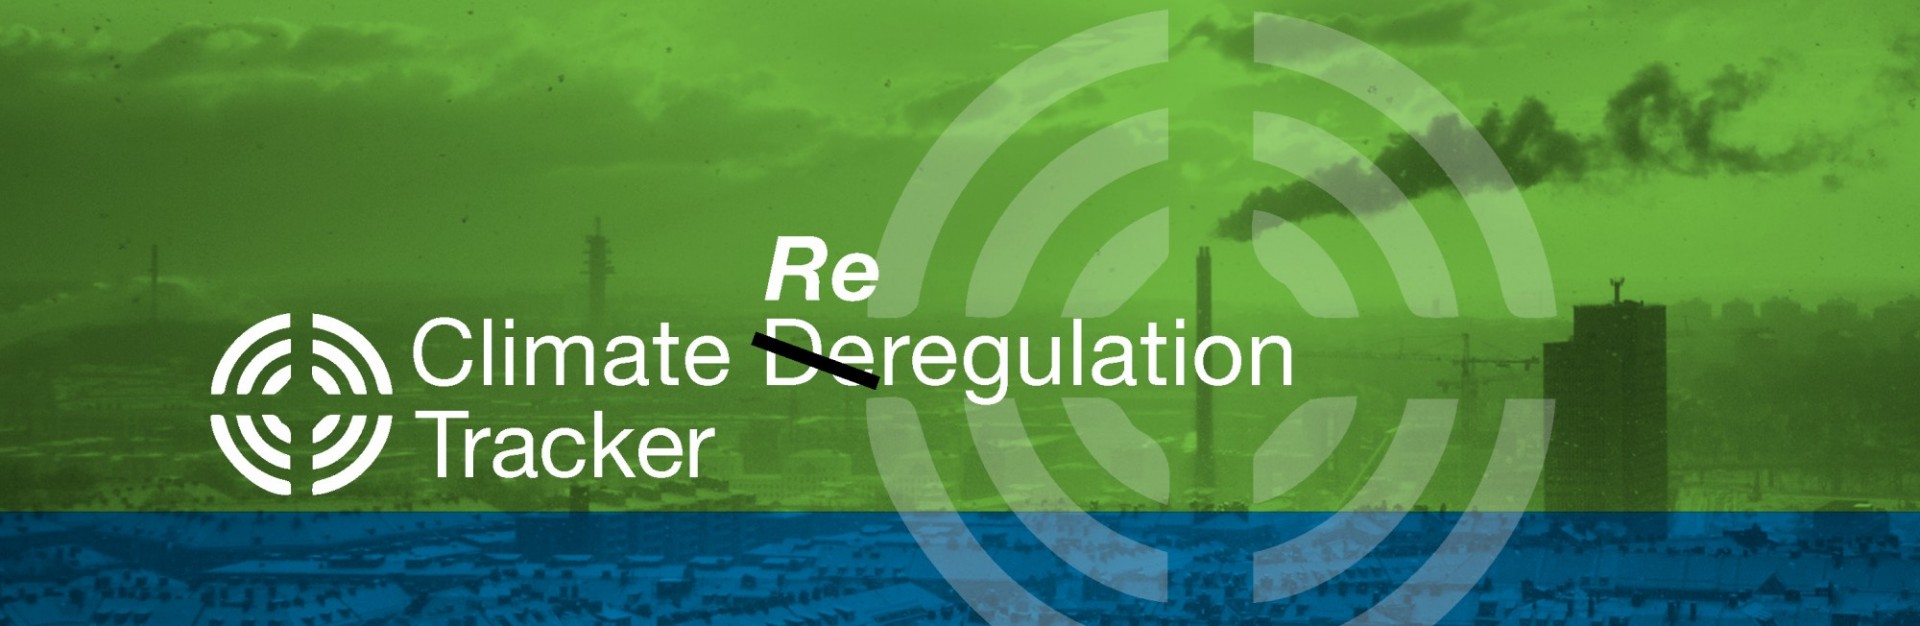 Climate Reregulation Tracker